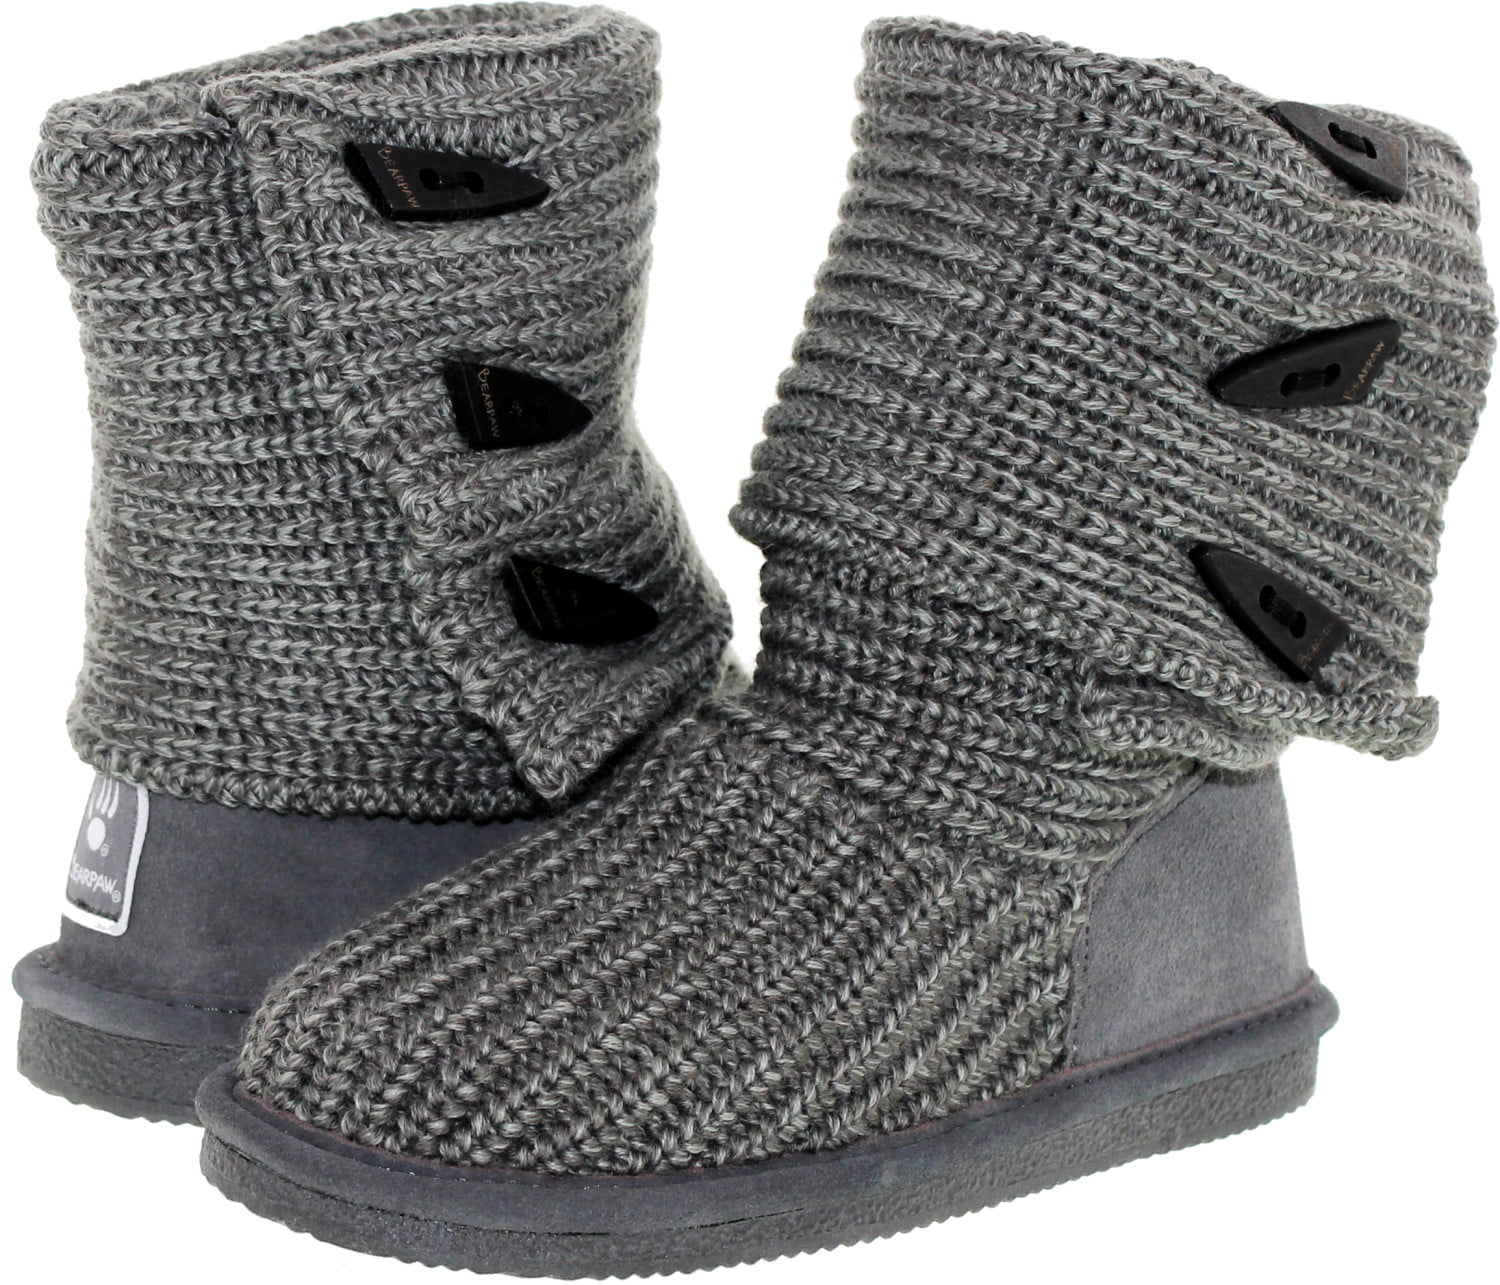 Bearpaw - Bearpaw Women's Knit Tall Gray Mid-Calf Wool Snow Boot - 9M ...